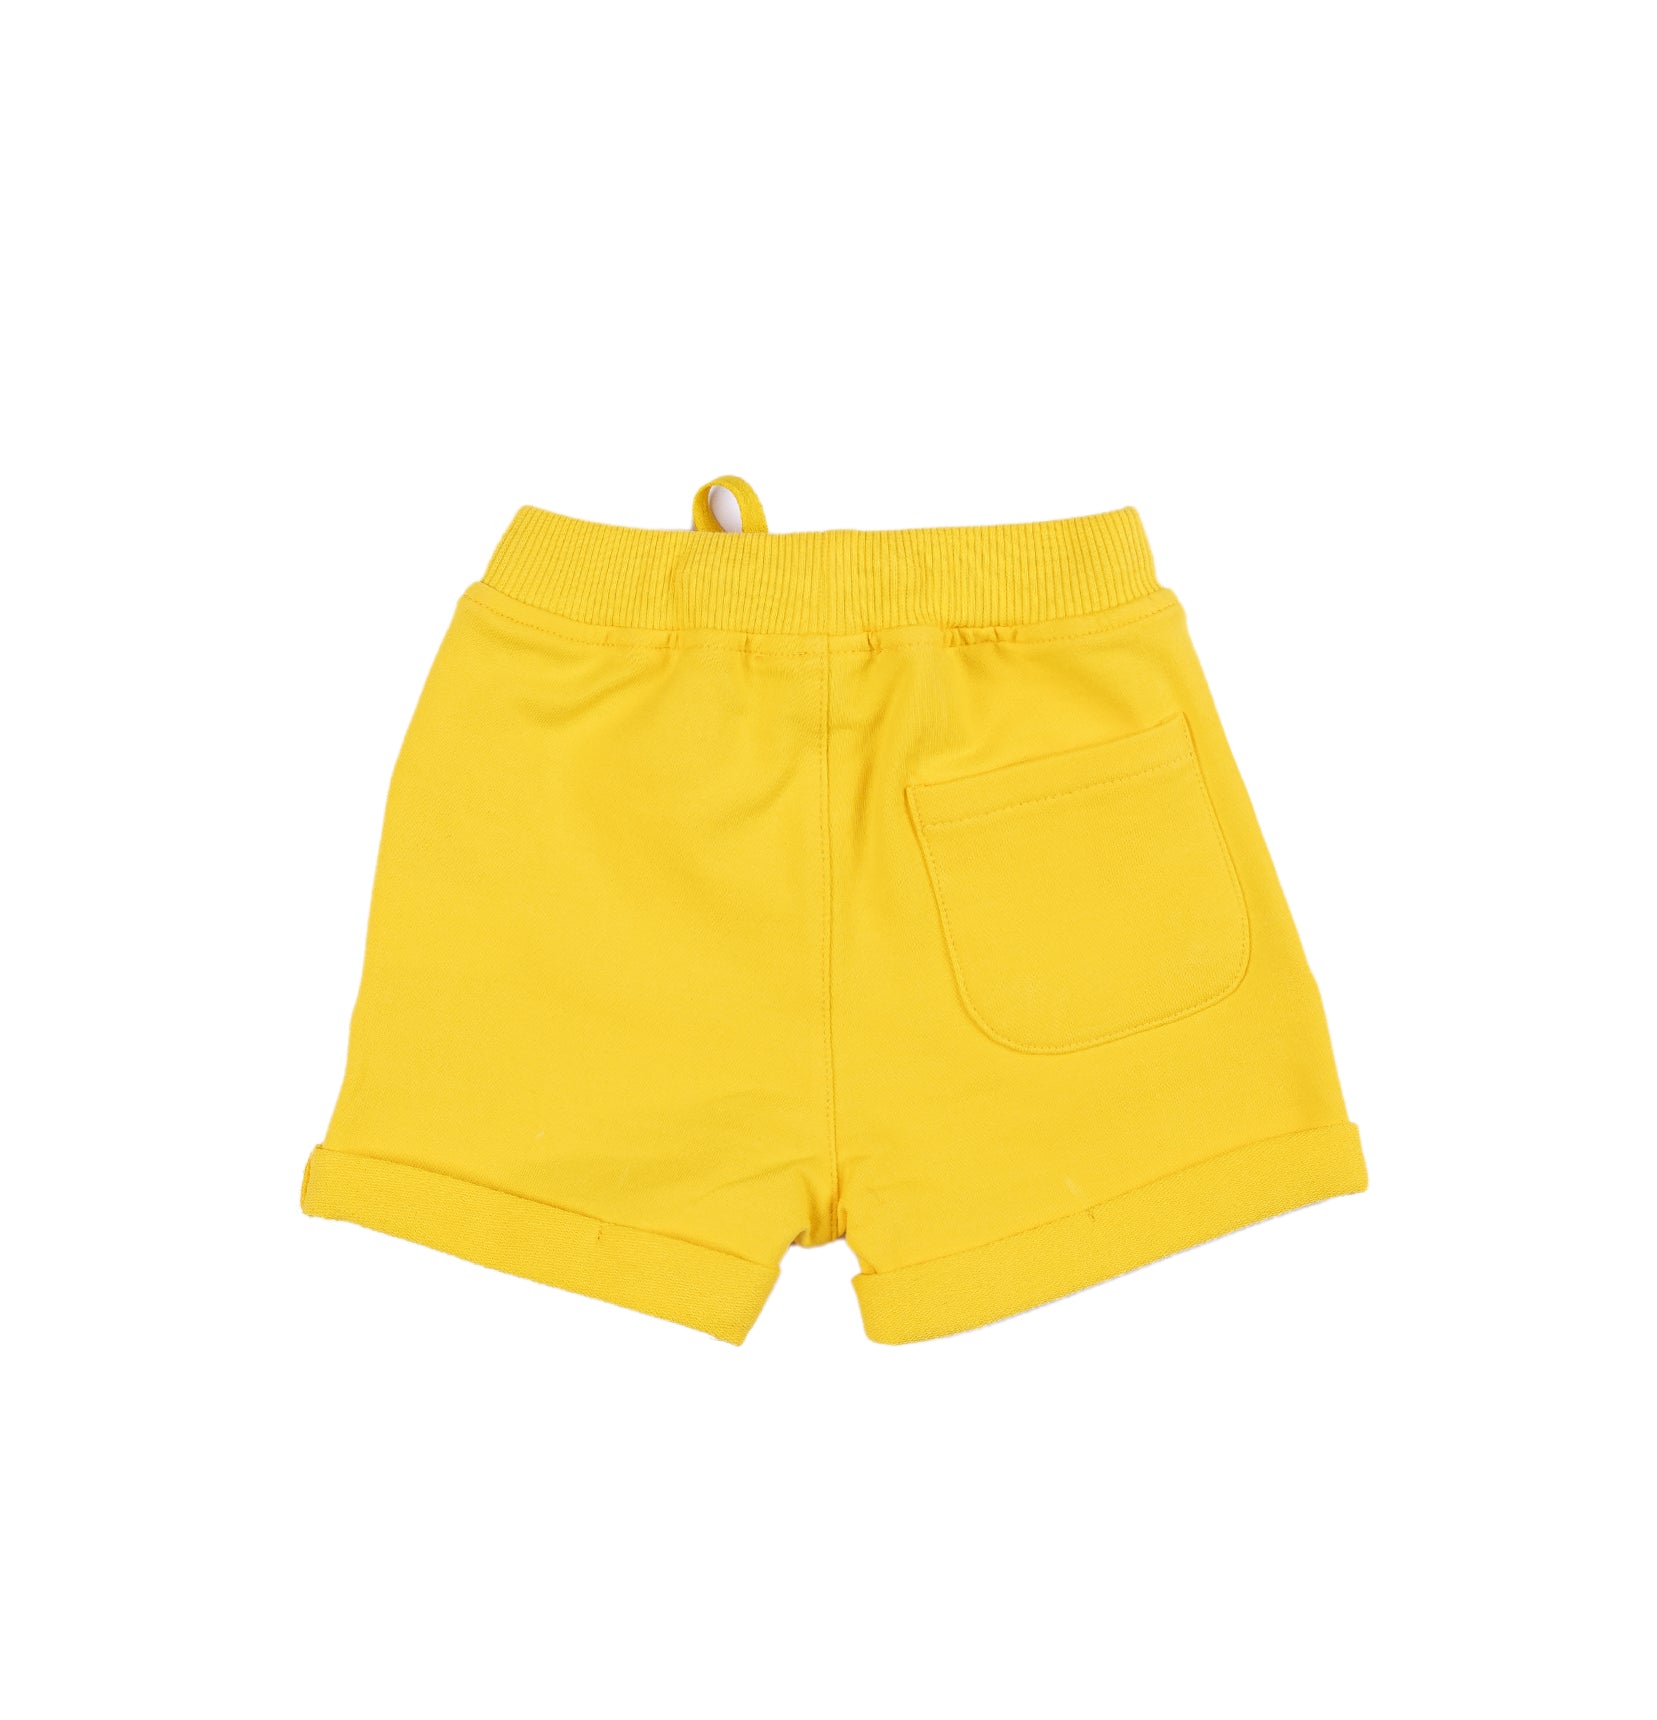 Boy plain shortS with pockets by Pompelo